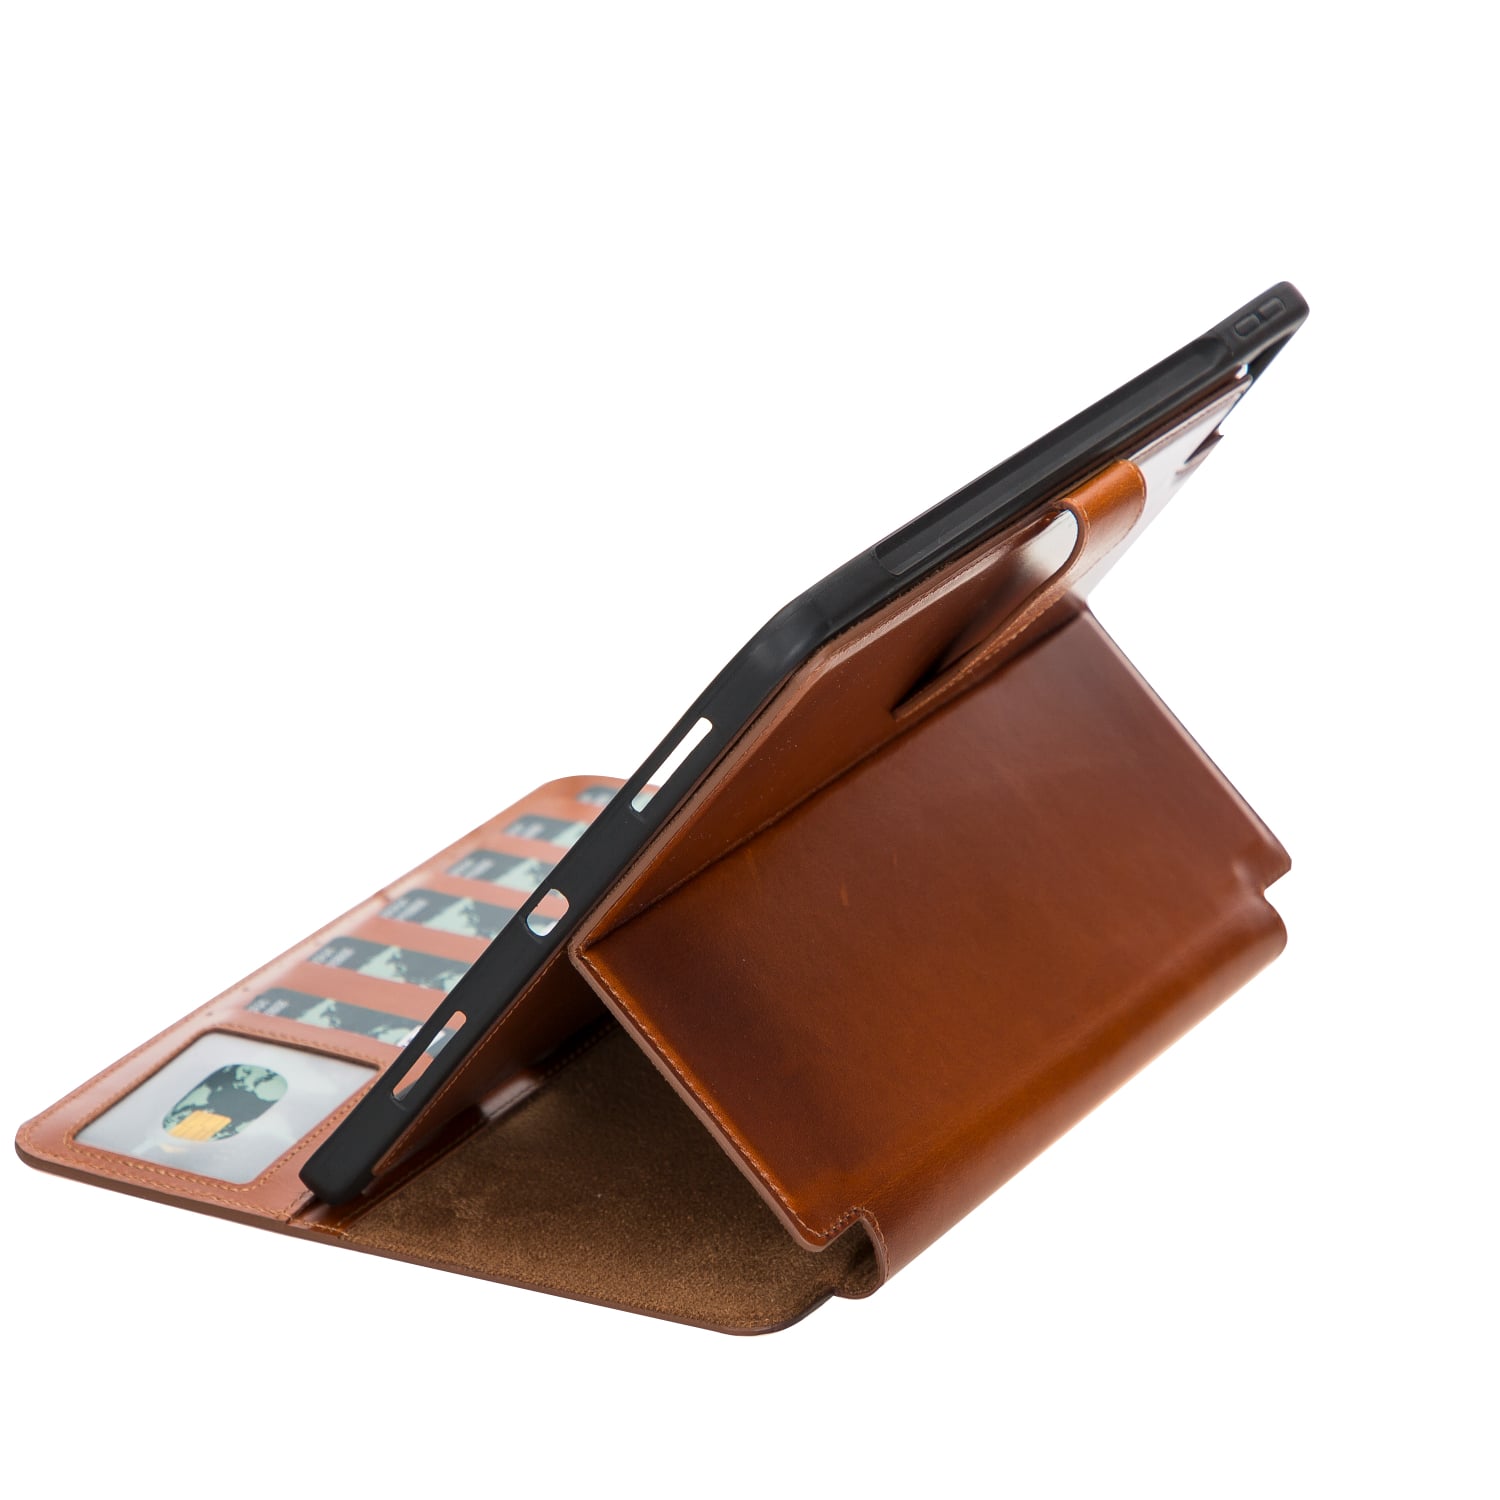 Brown Leather iPad Pro 11 Inc Smart Folio Case with Apple Pen Holder - Bomonti - 7